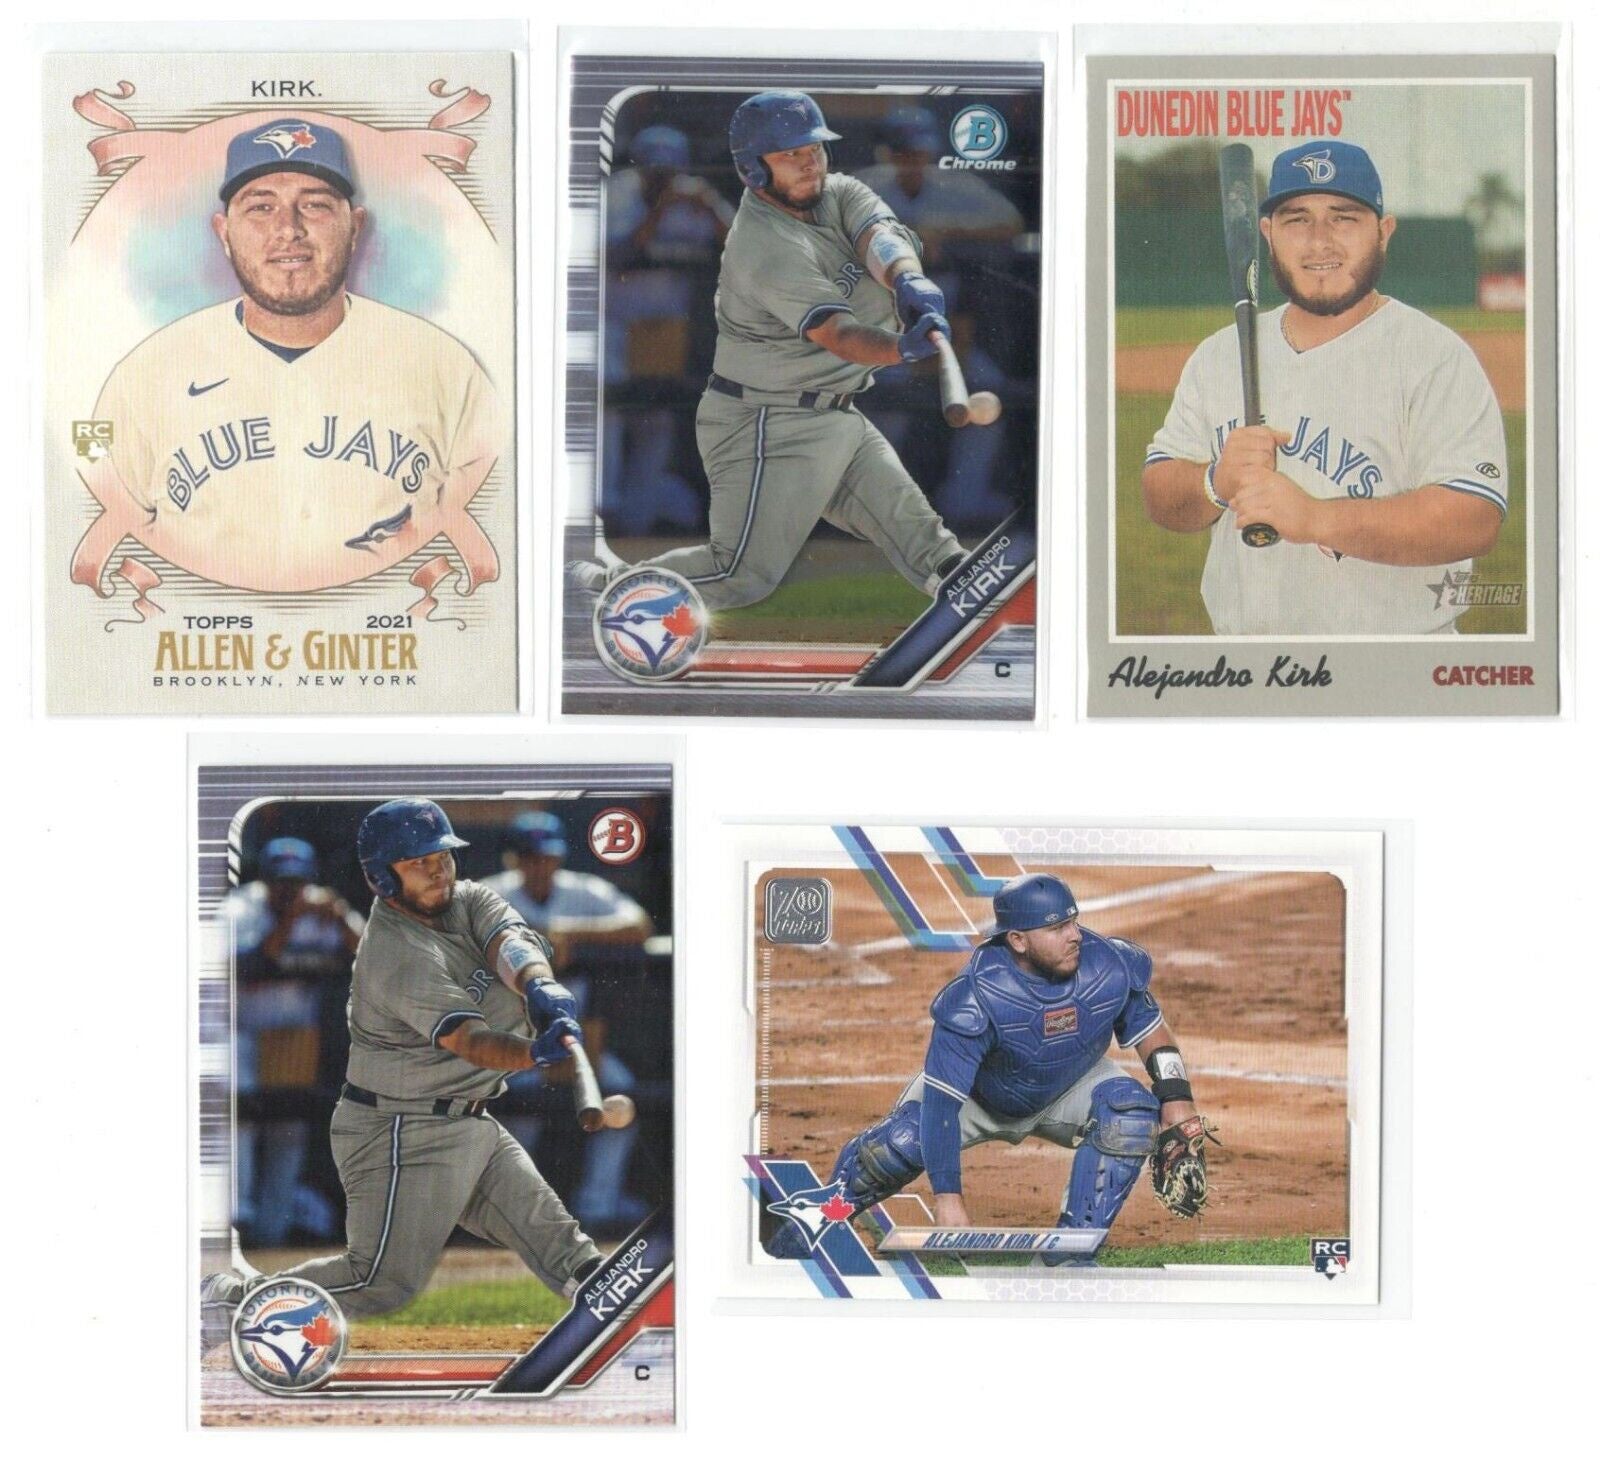 Alejandro Kirk - Toronto Blue Jays - MLB Baseball - 2021 Rookie Card Single (1x Randomly Selected RC, May Not Be Pictured)